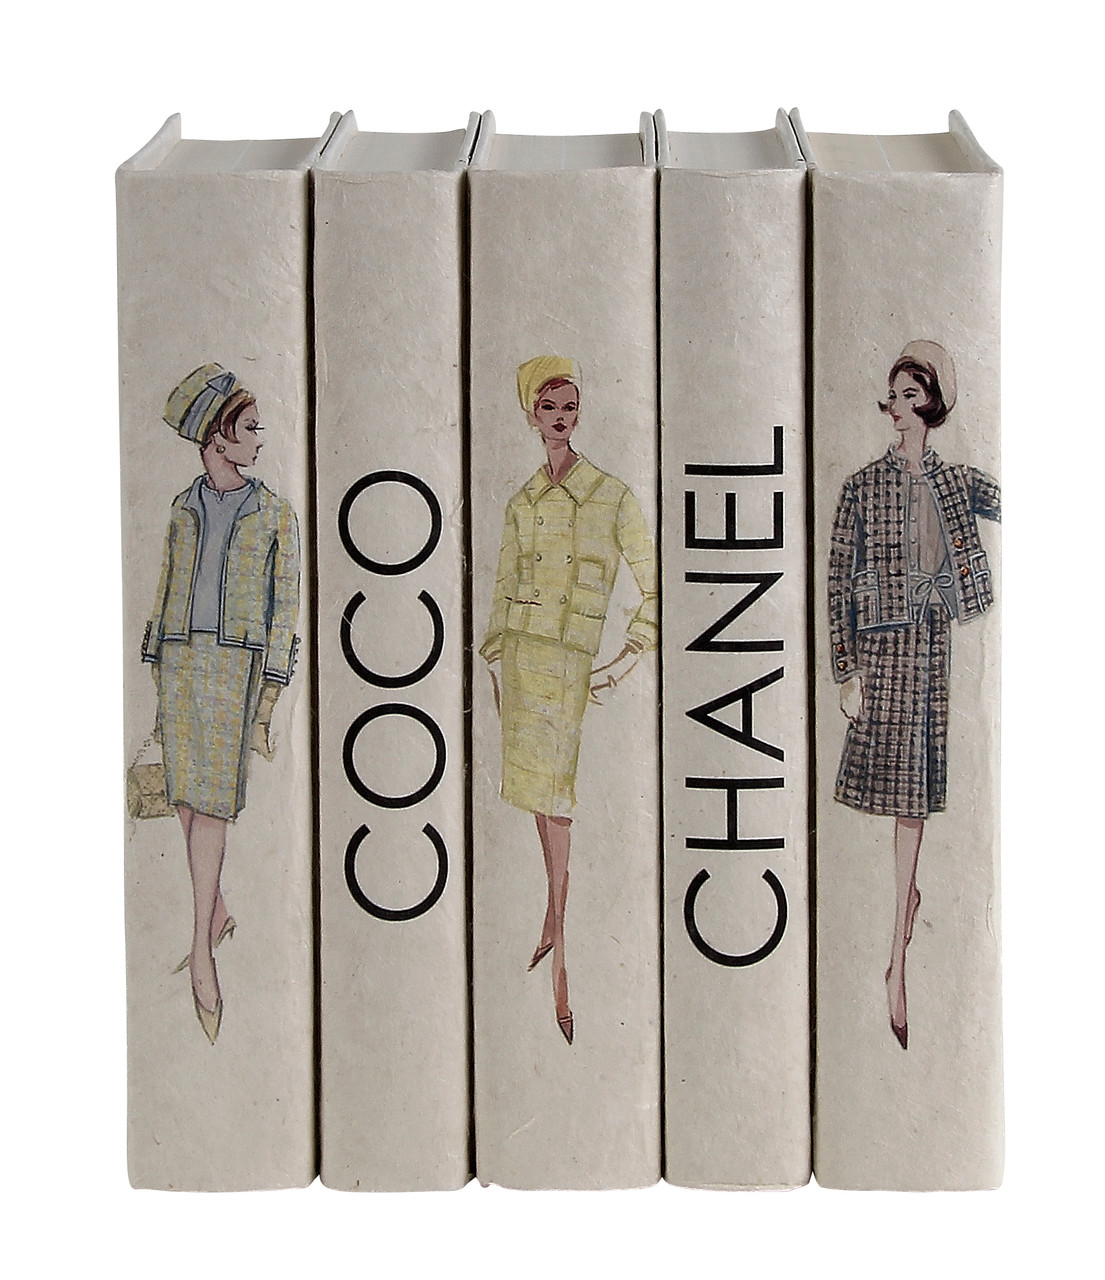 Coco Chanel timeline  Timetoast timelines